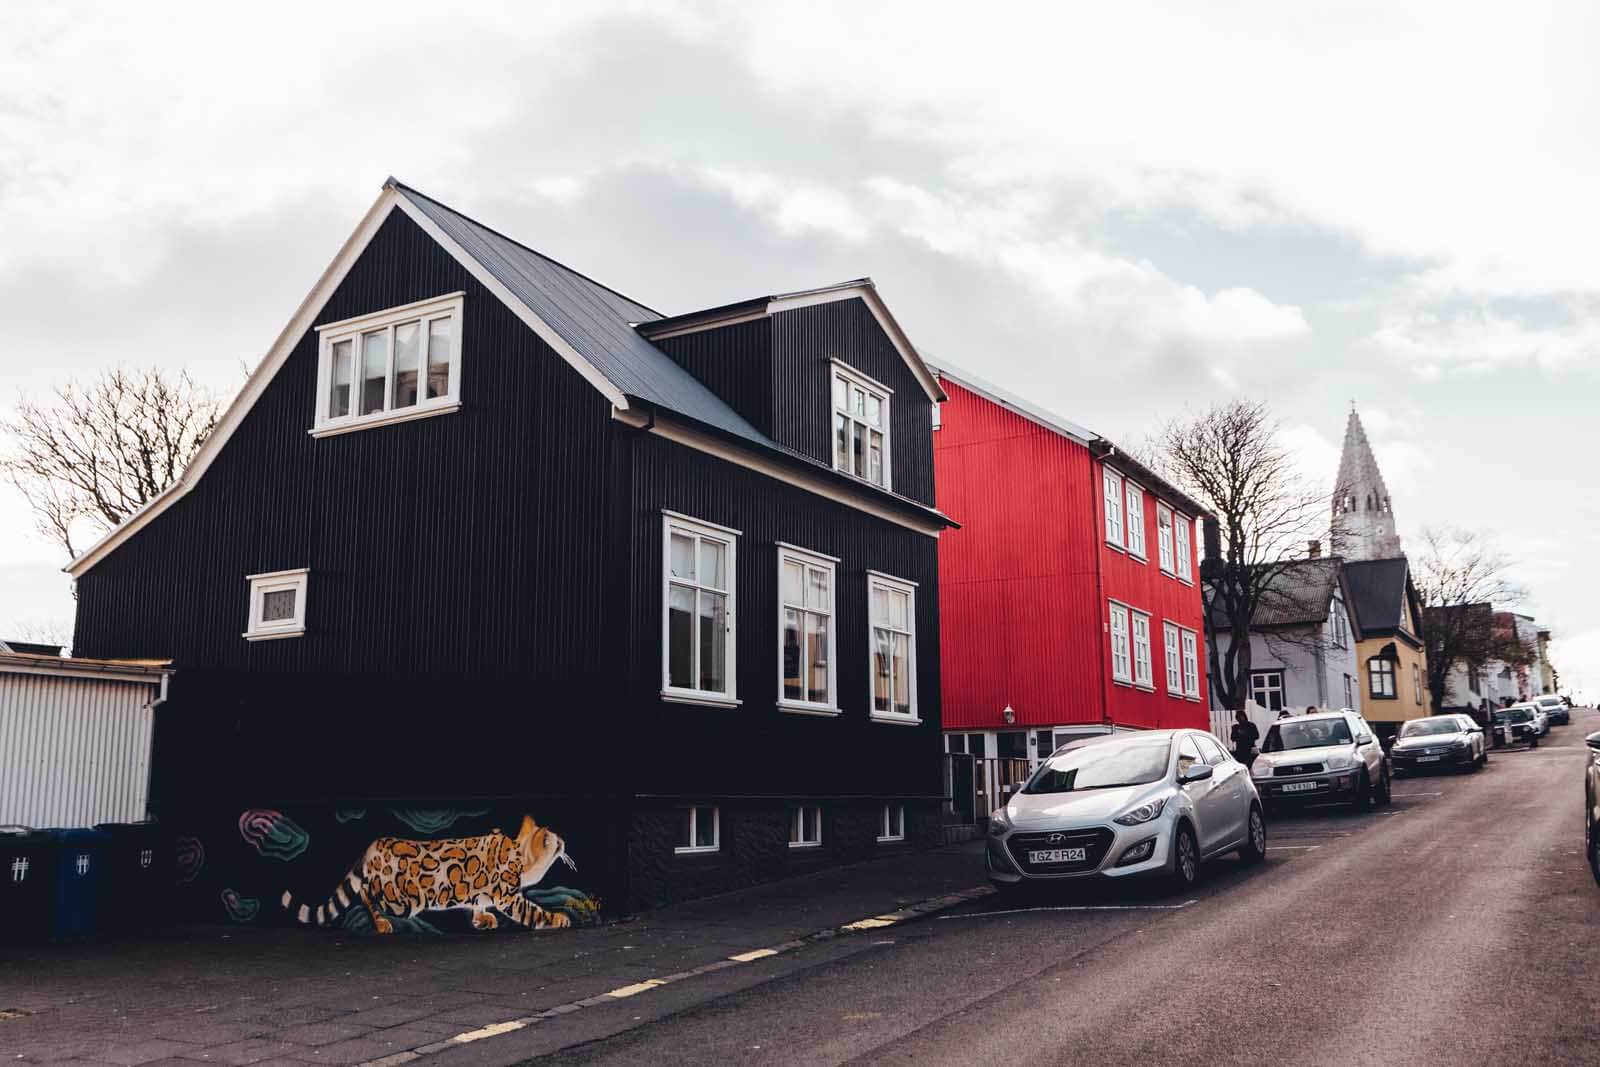 Exploring the streets of Reykjavik